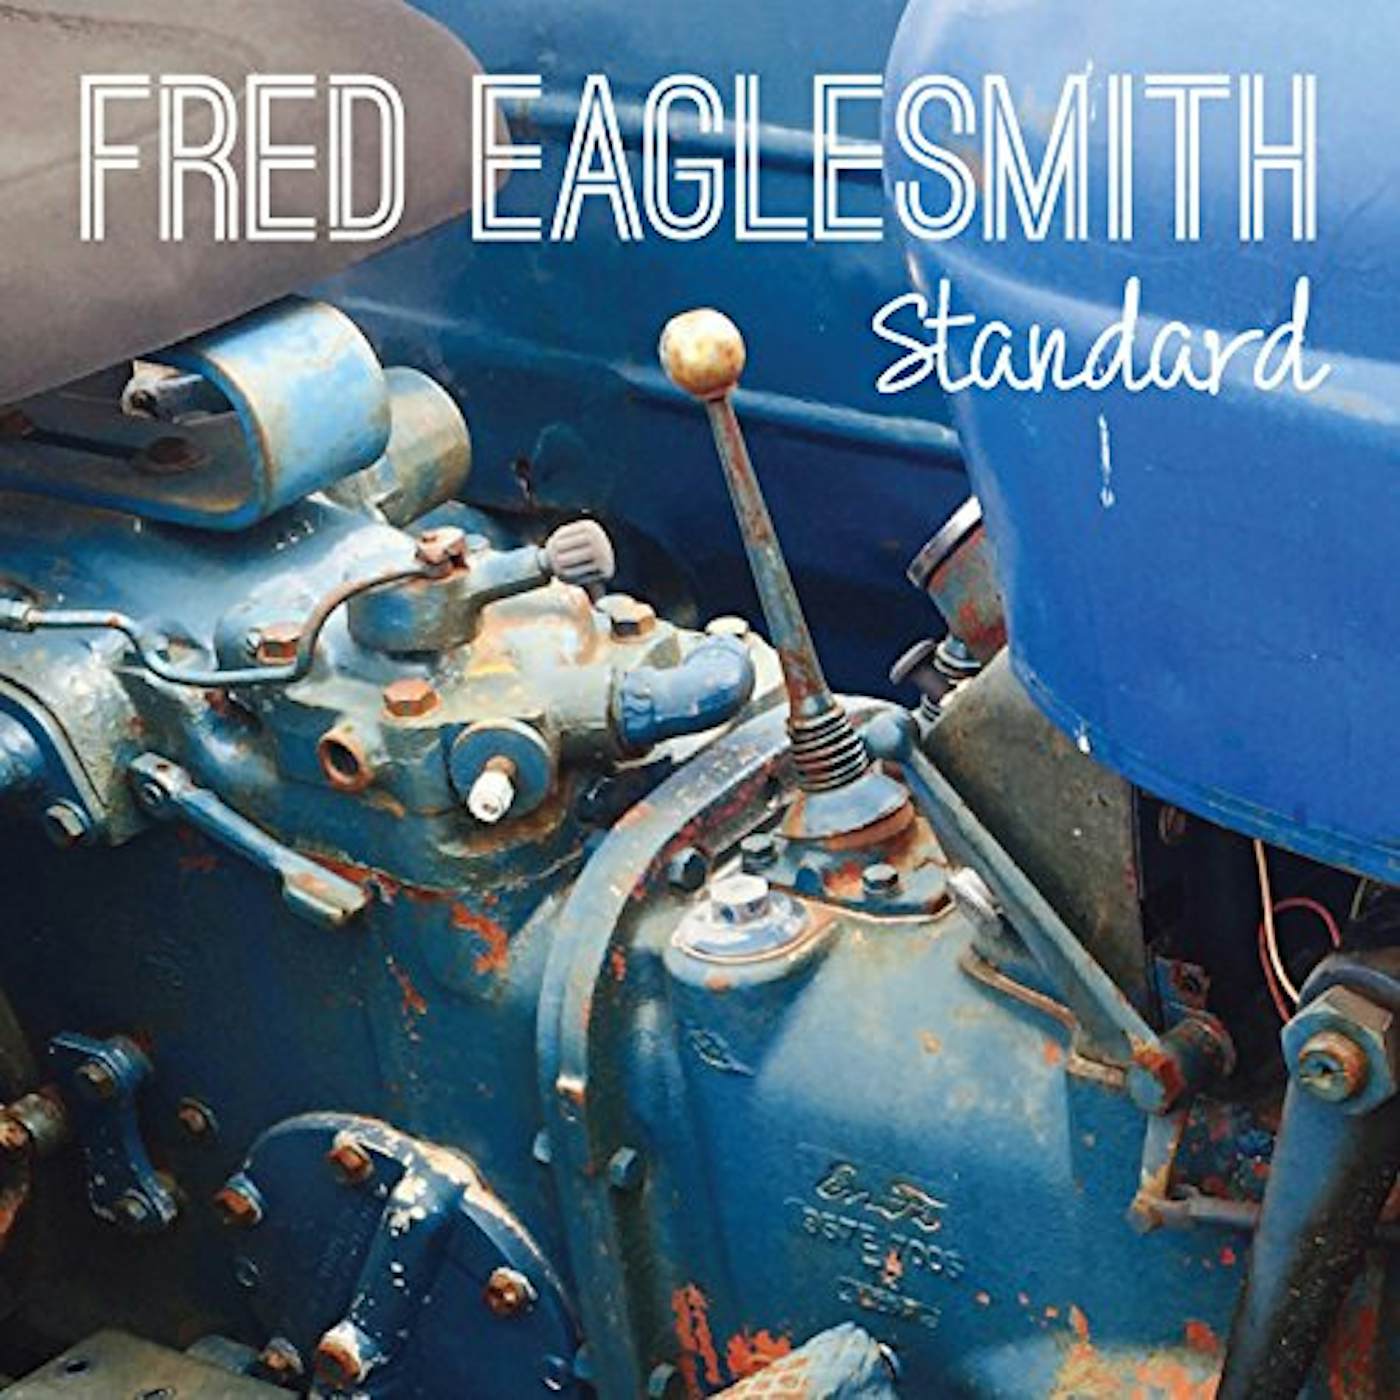 Fred Eaglesmith STANDARD CD